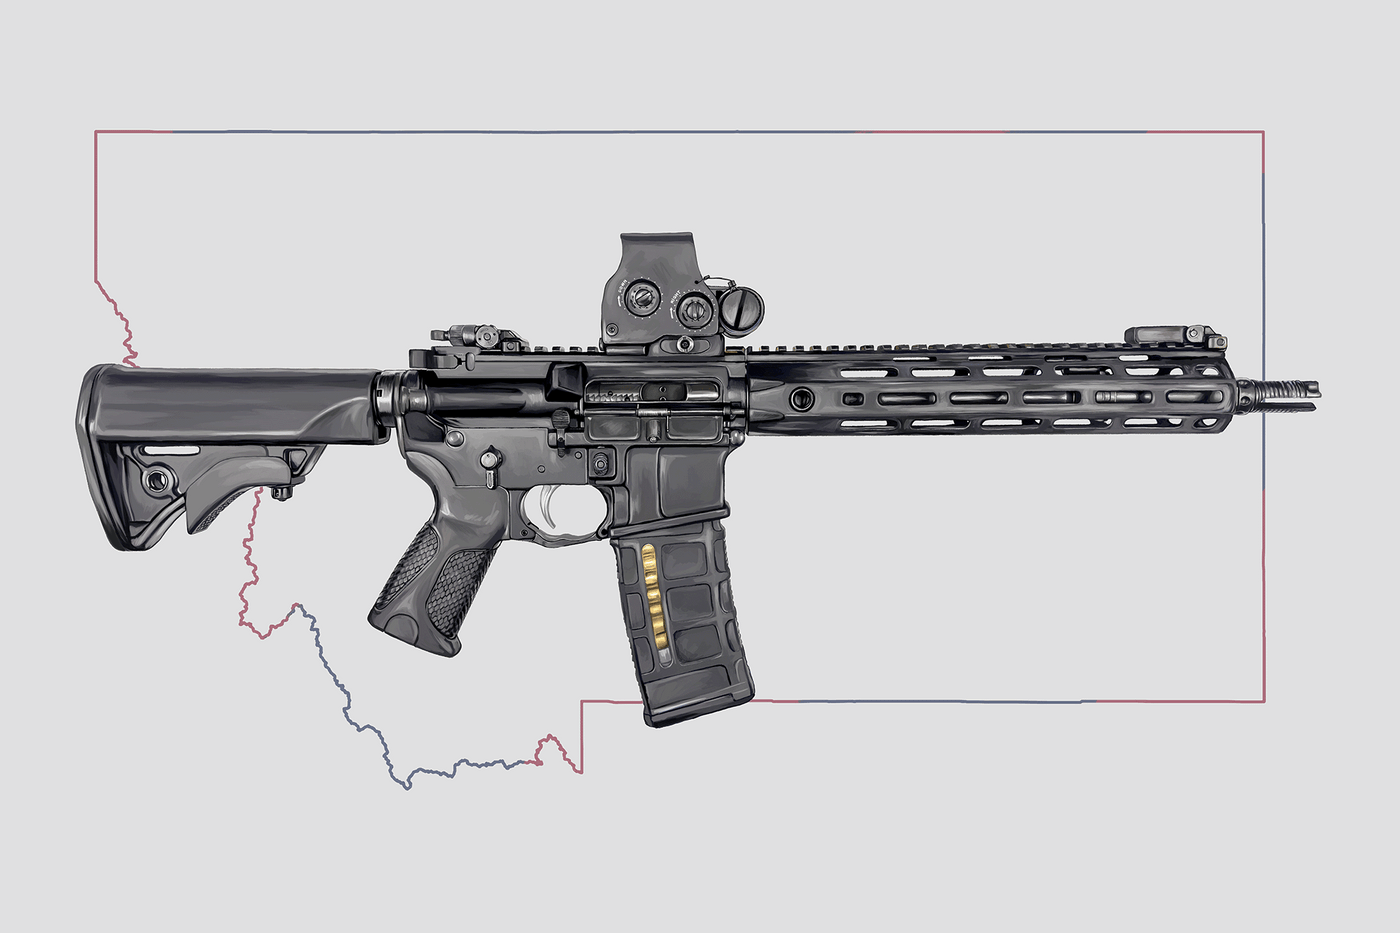 Defending Freedom - Montana - AR-15 State Painting (Minimal)